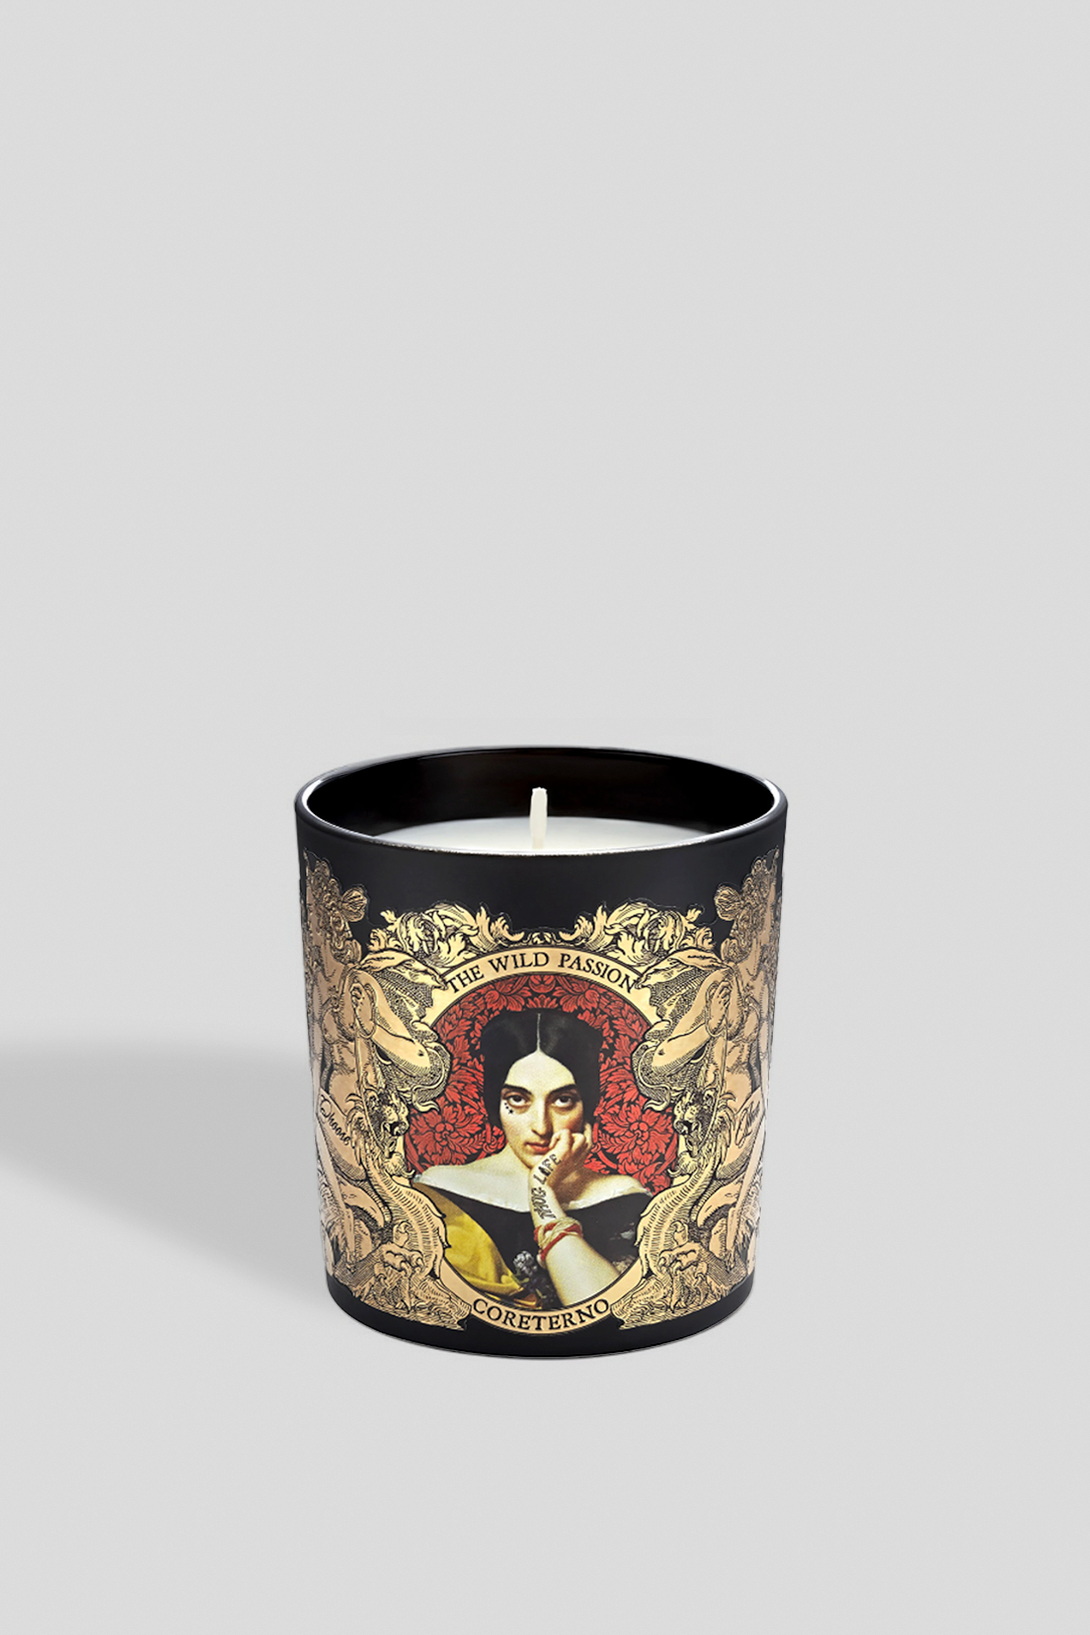 Coreterno Scented Candle,The Wild Passion コレテルノ キャンドル